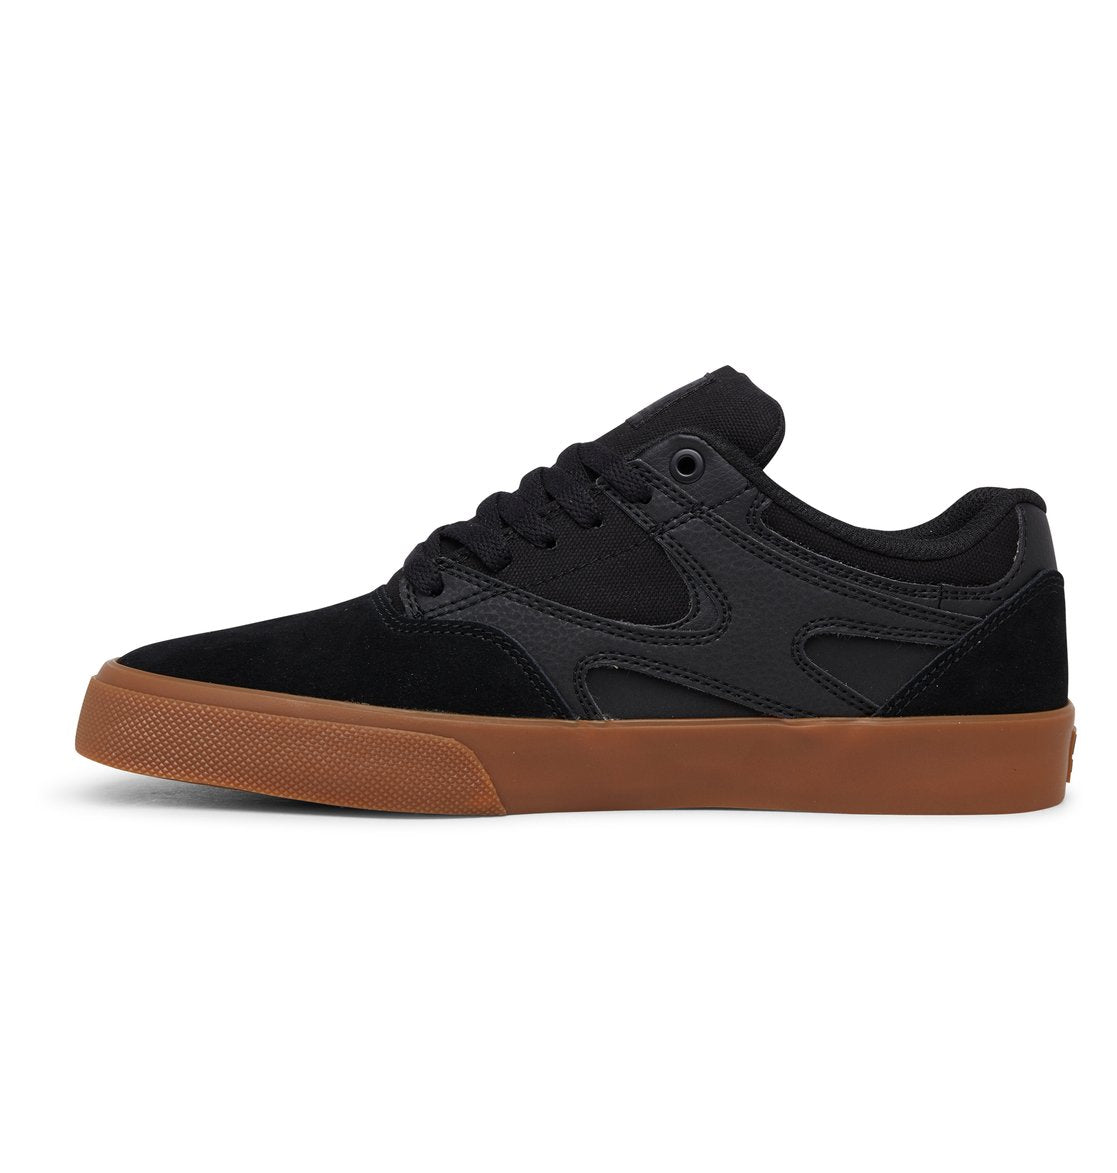 DC Kalis Vulc Black/Black/Gum Skateboard Shoe